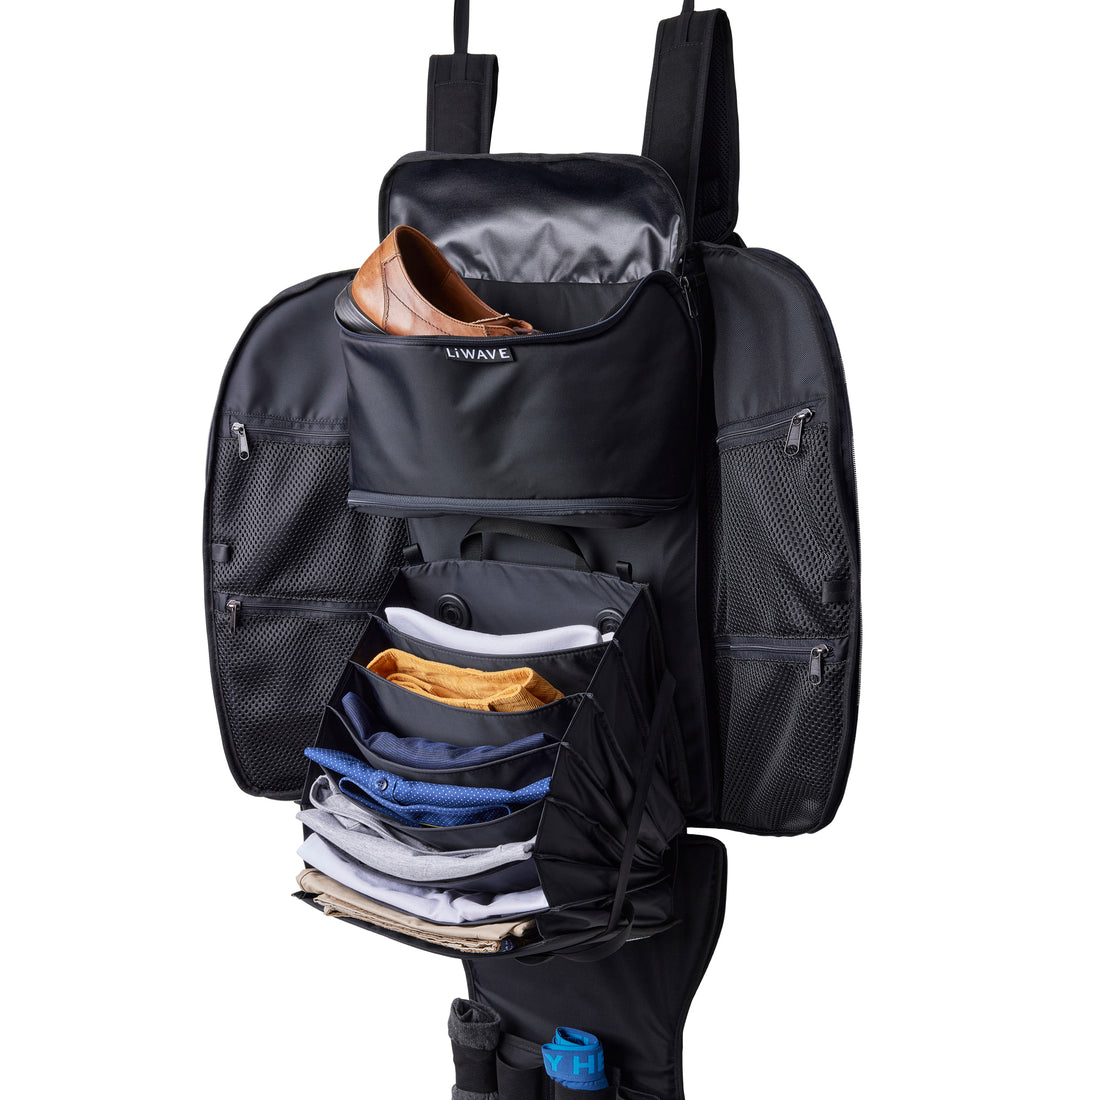 Travel-Bundle Everywhere – Premium 28l LiWAVE Rucksack